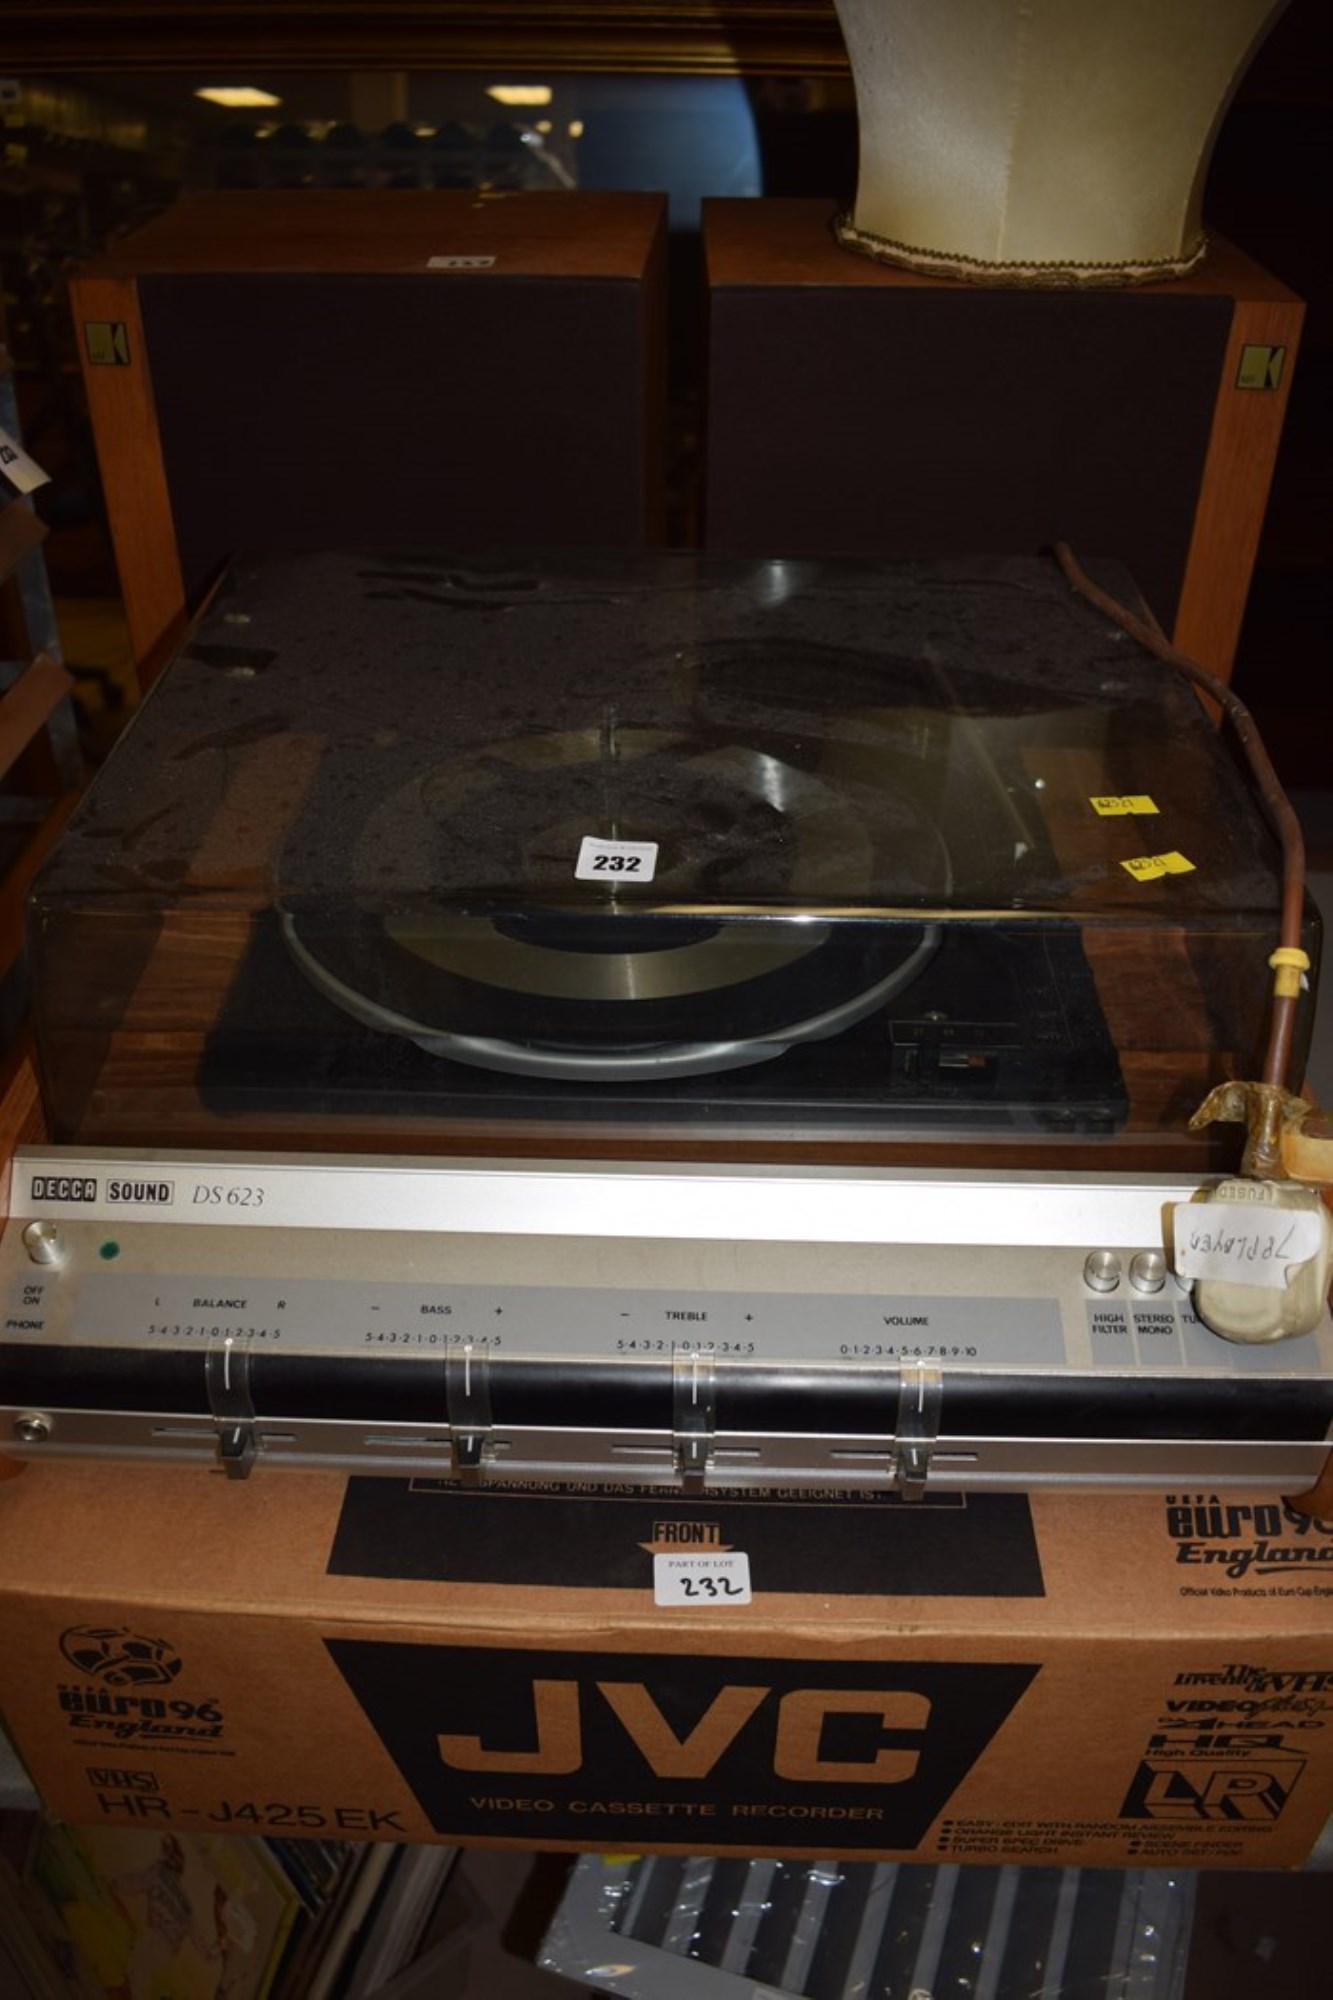 Lot 232 - A Decca sound turntable DS623; JVC video